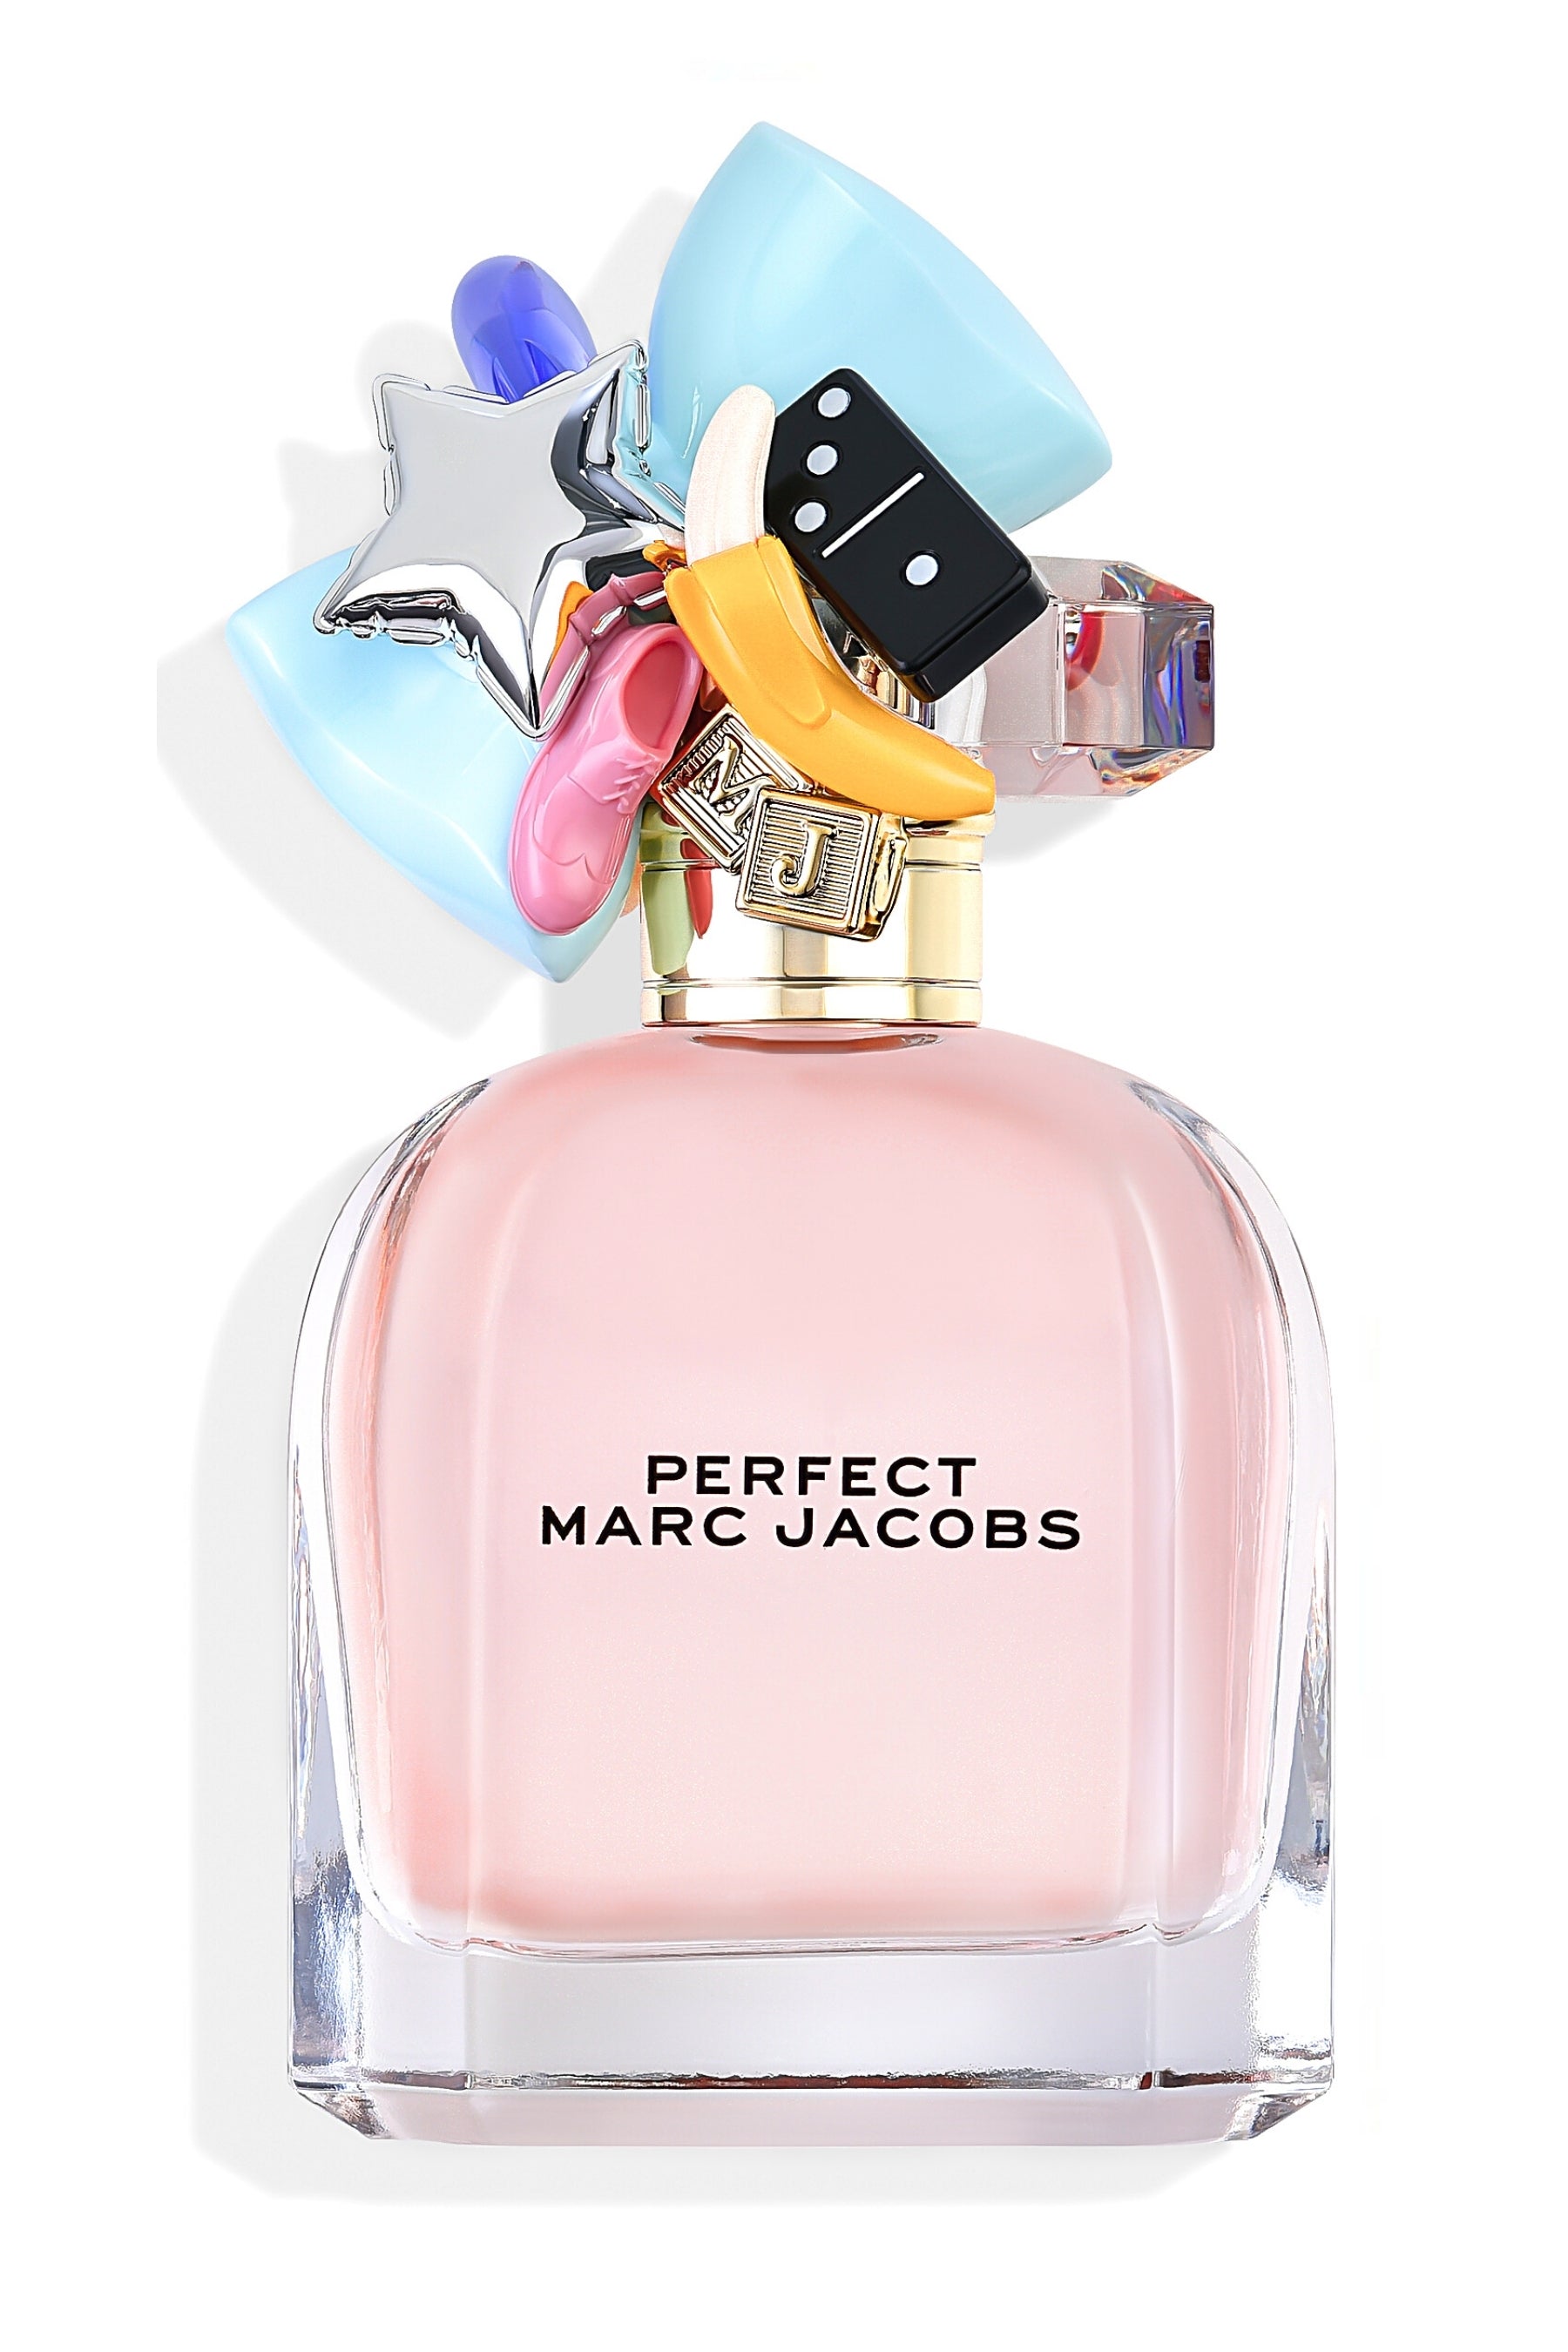 marc jacobs perfume